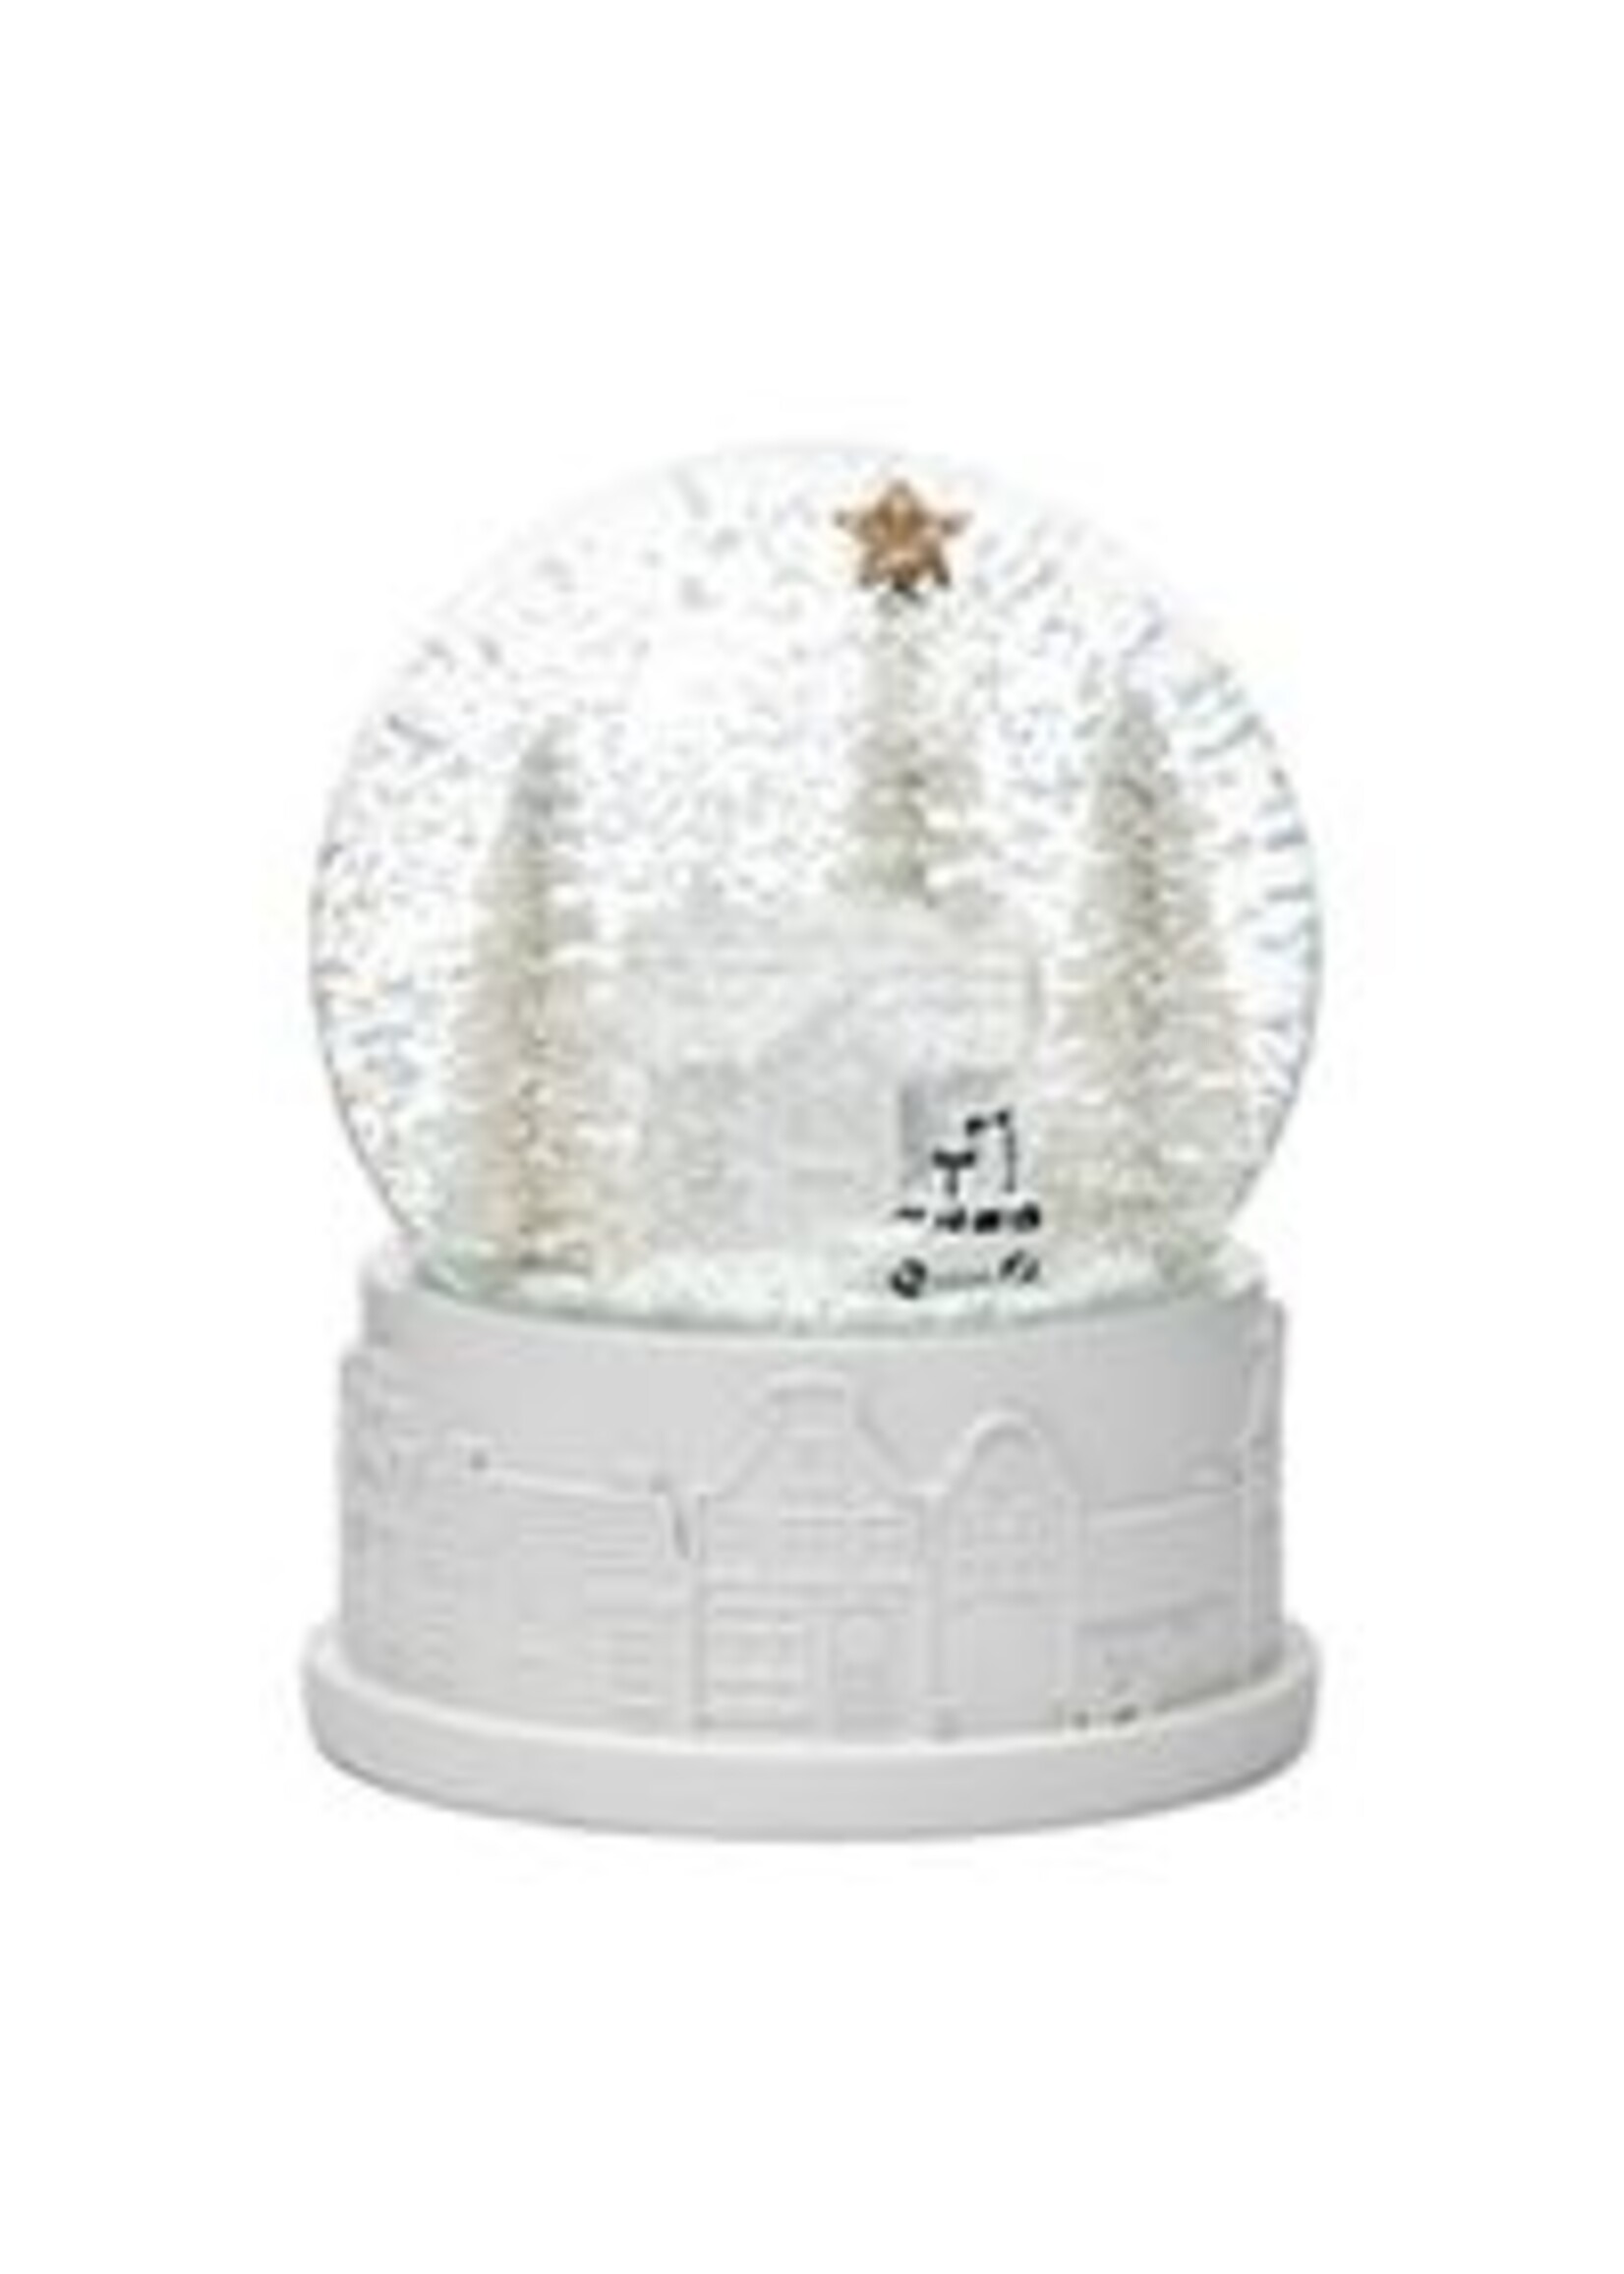 RM Winter Wonderland Snow Globe